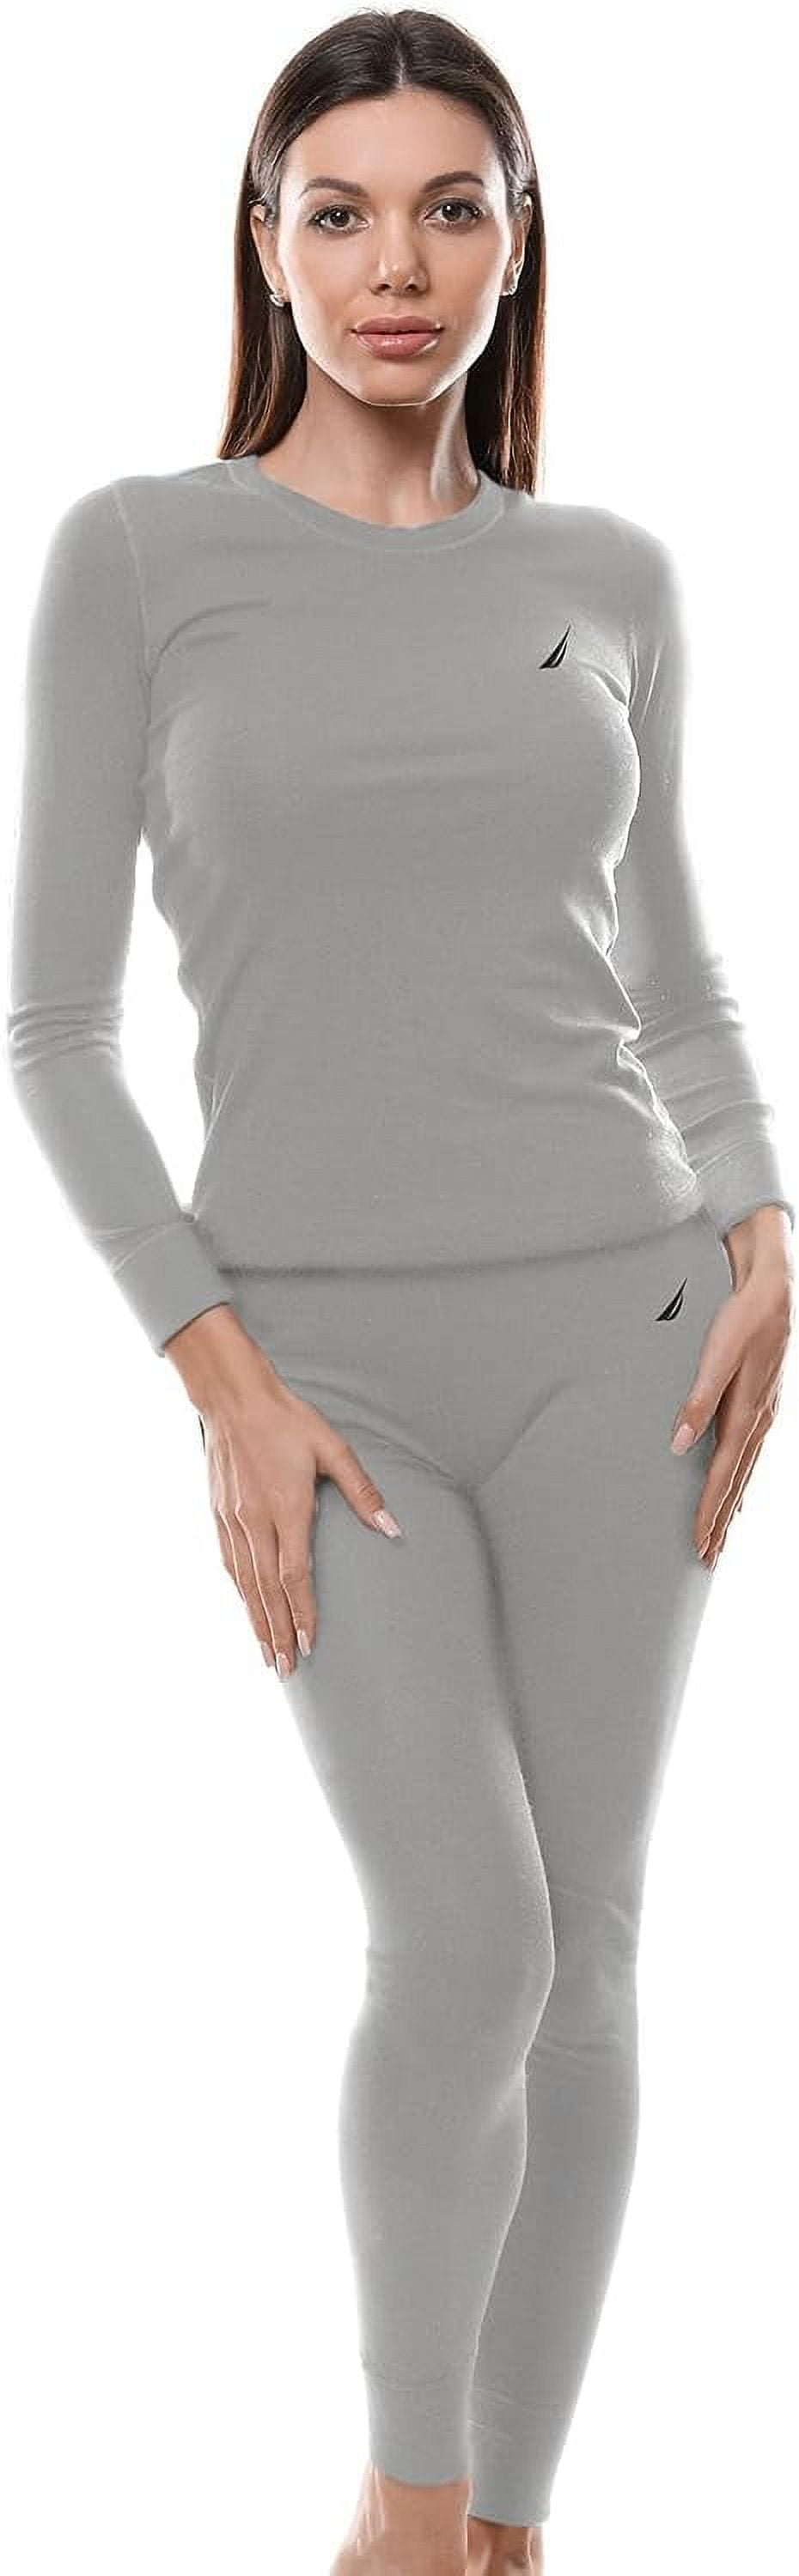 Nautica Womens Base Layer Set Thermal Underwear Shirt & Leggings